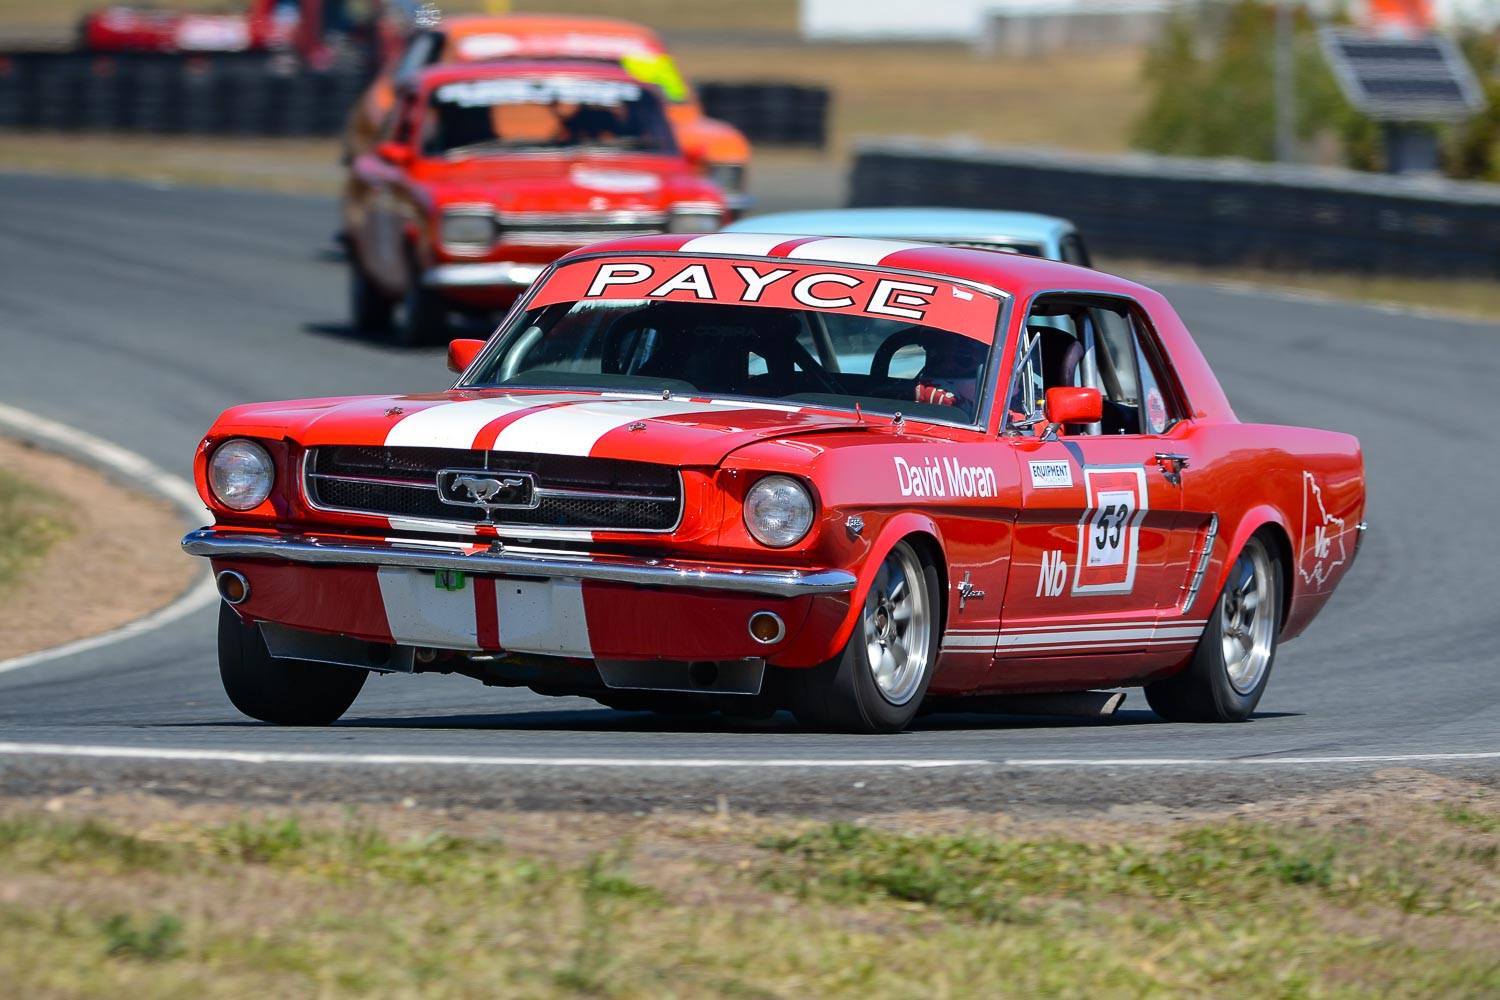 Spring Historics at Queensland Raceway features classic touring car racing